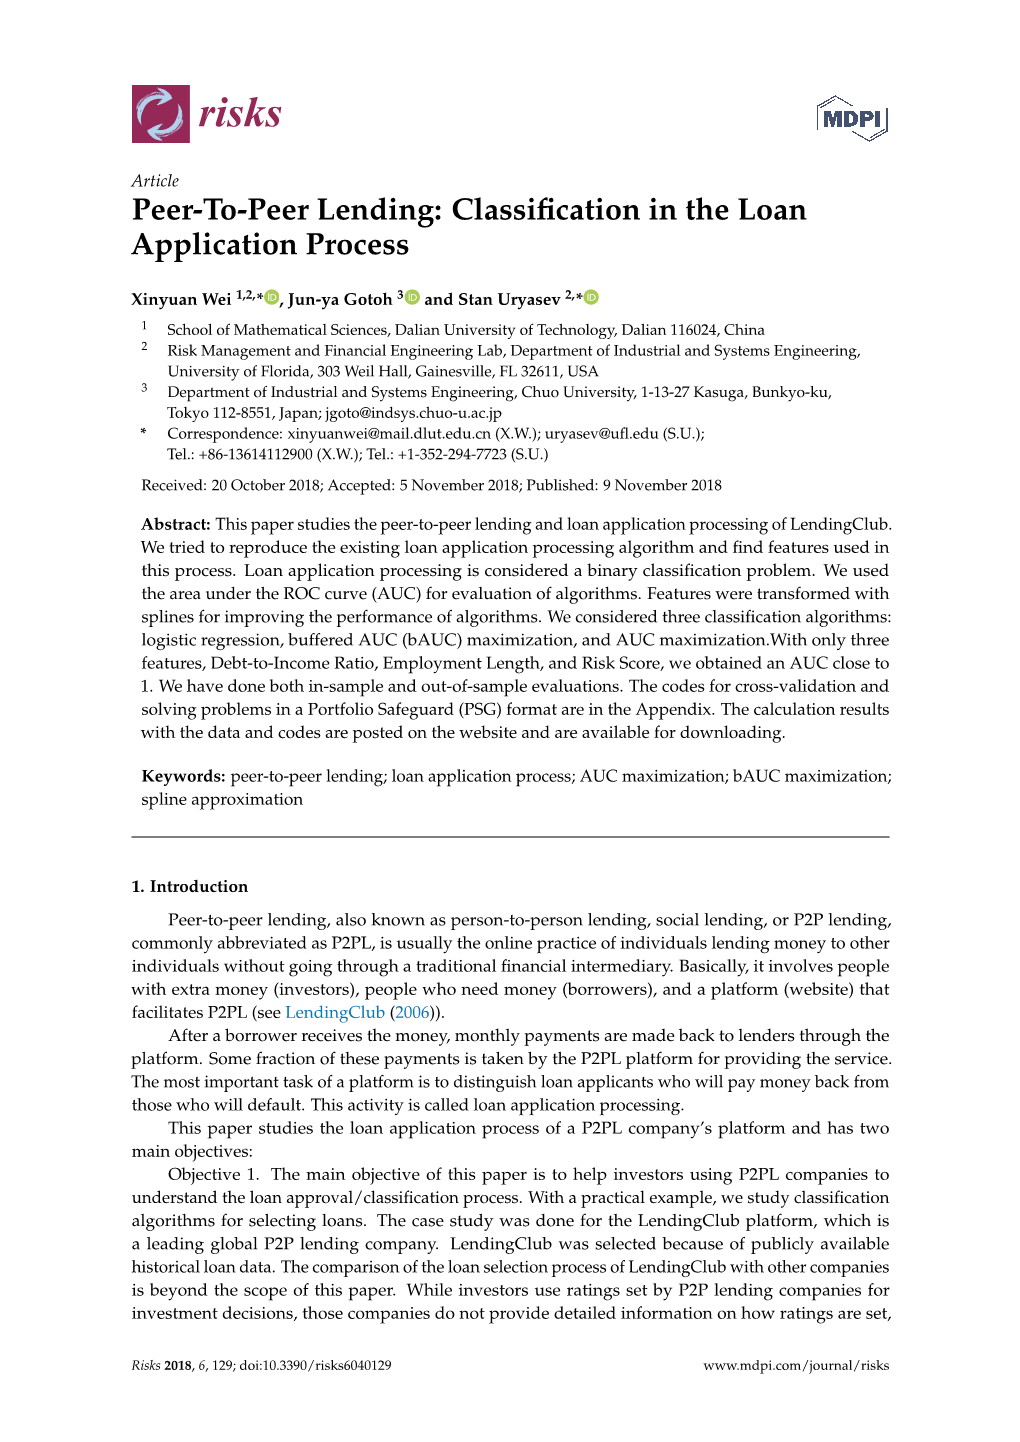 Peer-To-Peer Lending: Classification in the Loan Application Process